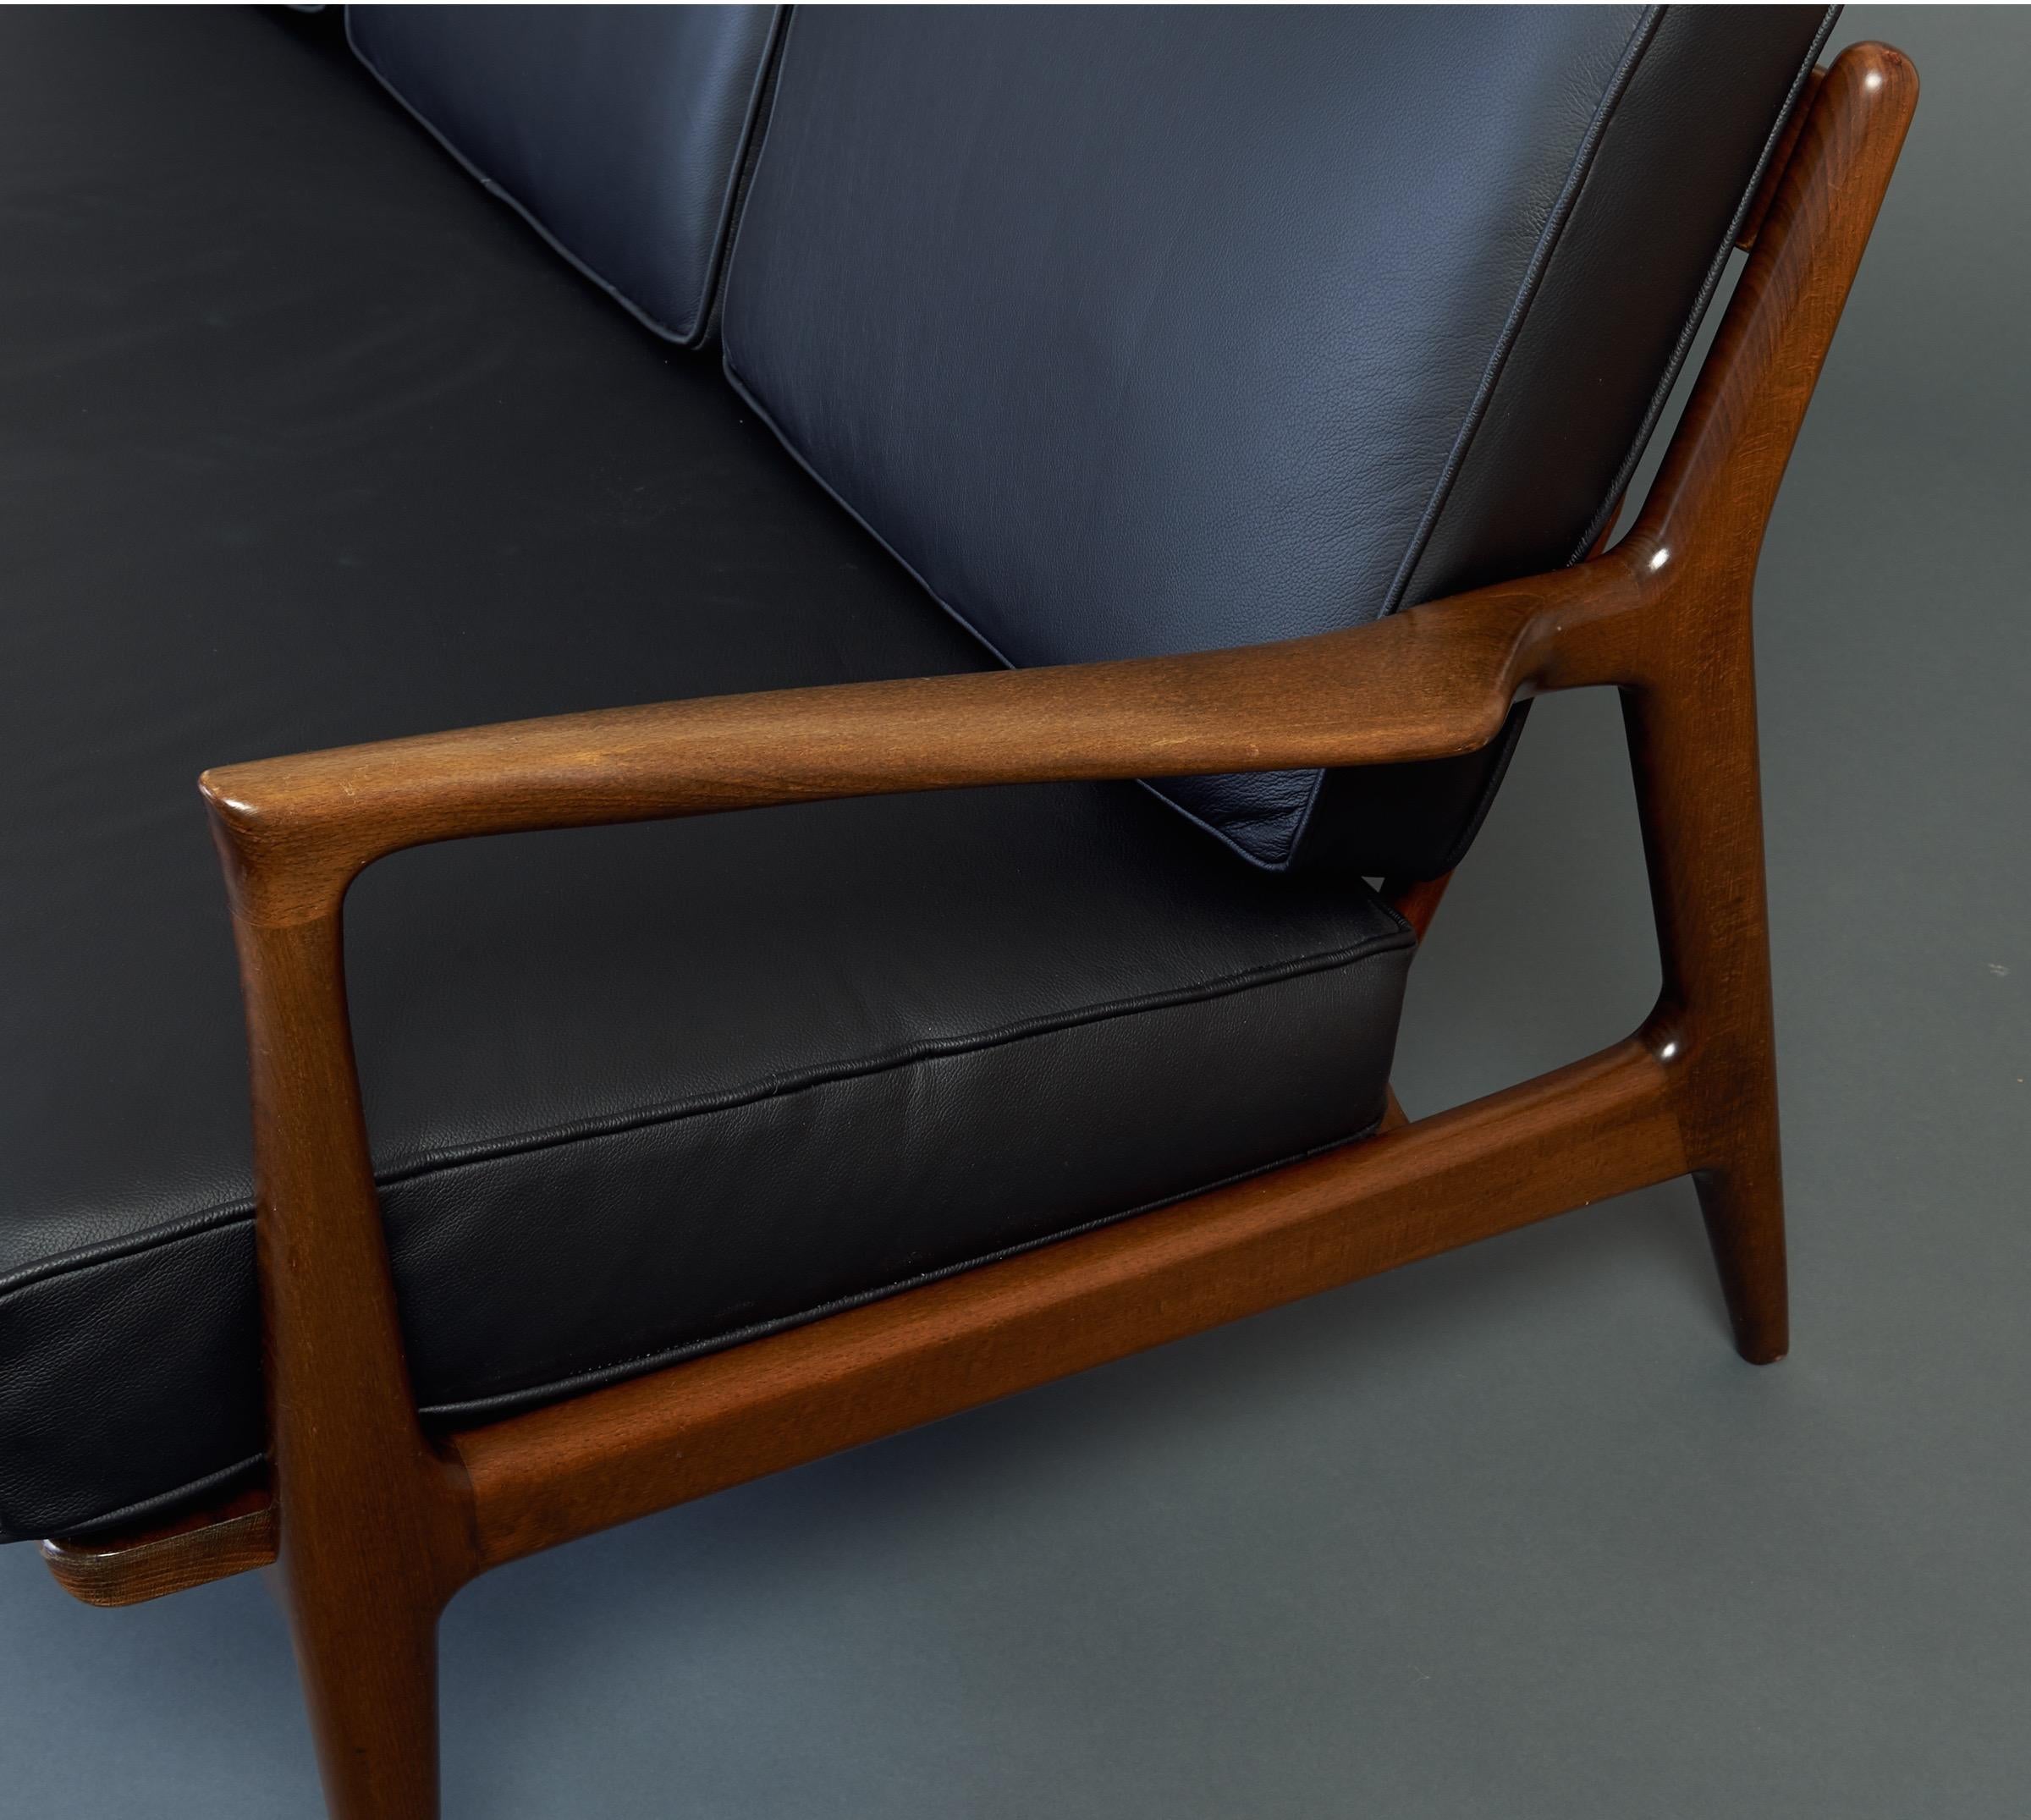 Mid-20th Century Sleek Danish Modern Sofa by Ib Kofod-Larsen in Teak and Black Leather, 1950s For Sale